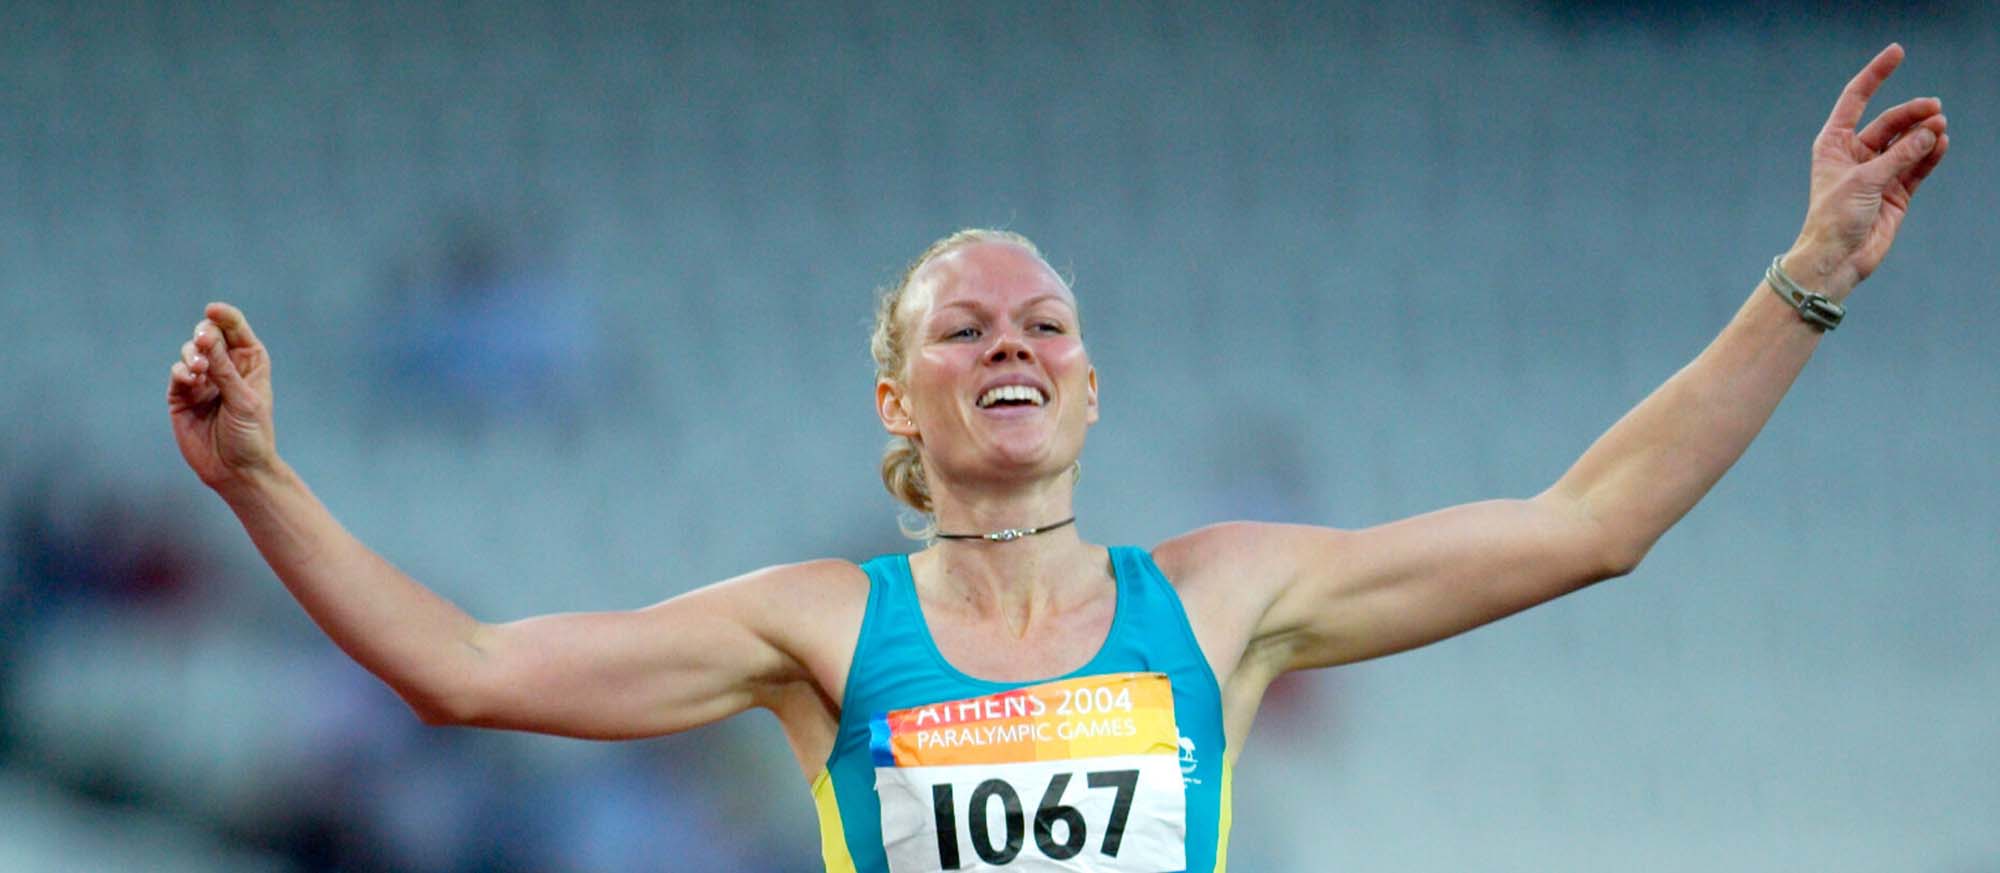 Katrina Webb competing. Photo credit: Paralympics Australia